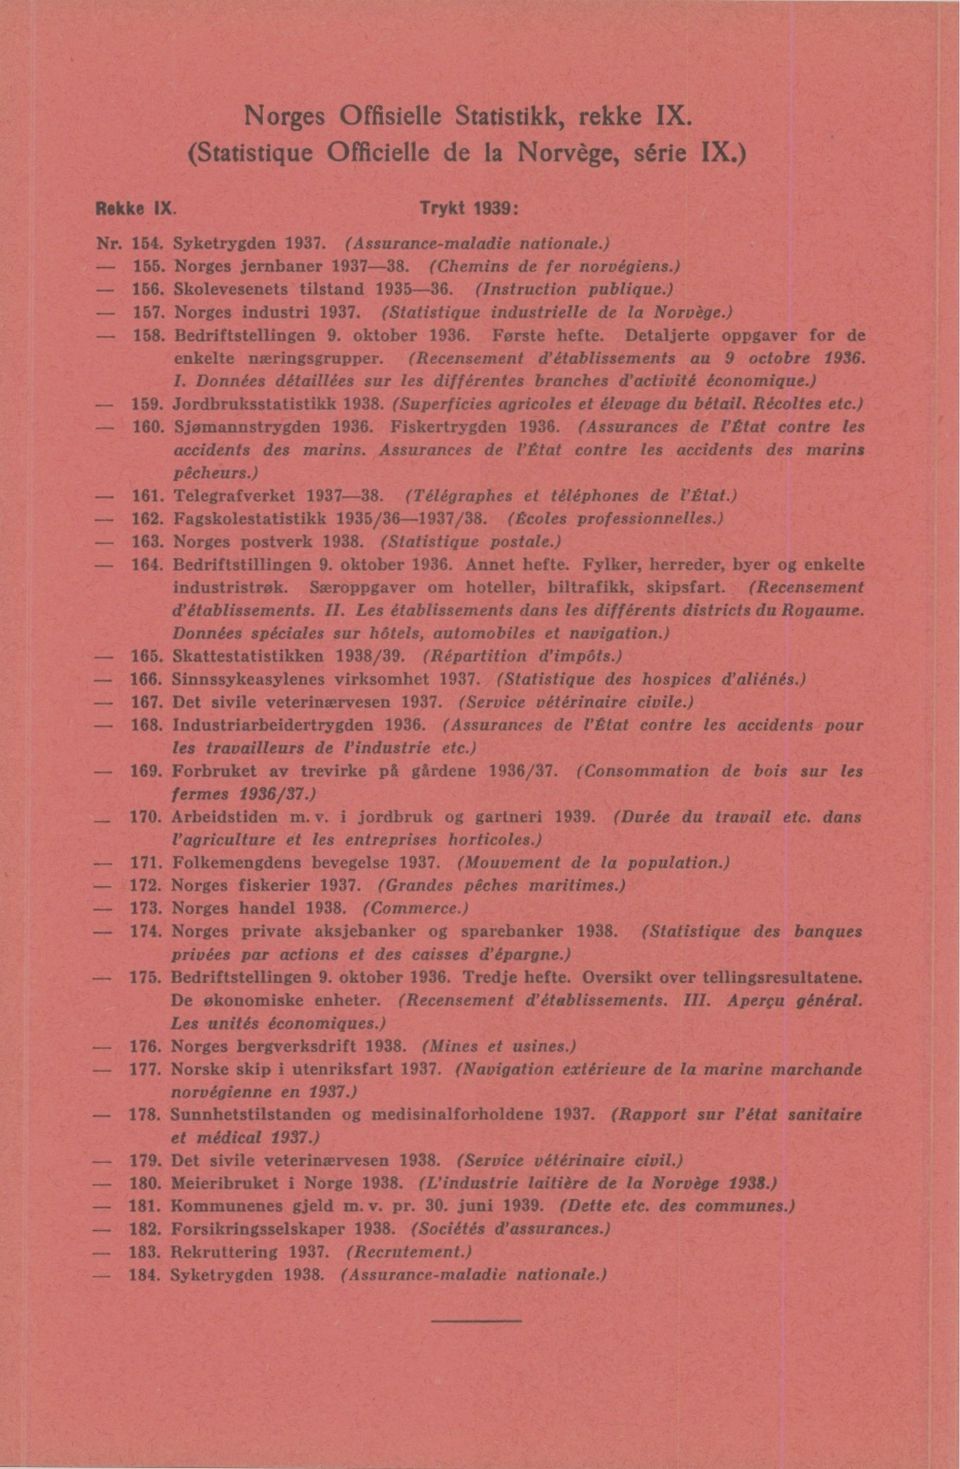 oktober 1936. Første hefte. Detaljerte oppgaver for de enkelte næringsgrupper. (Recensement d'établissements au 9 octobre 1936. I.